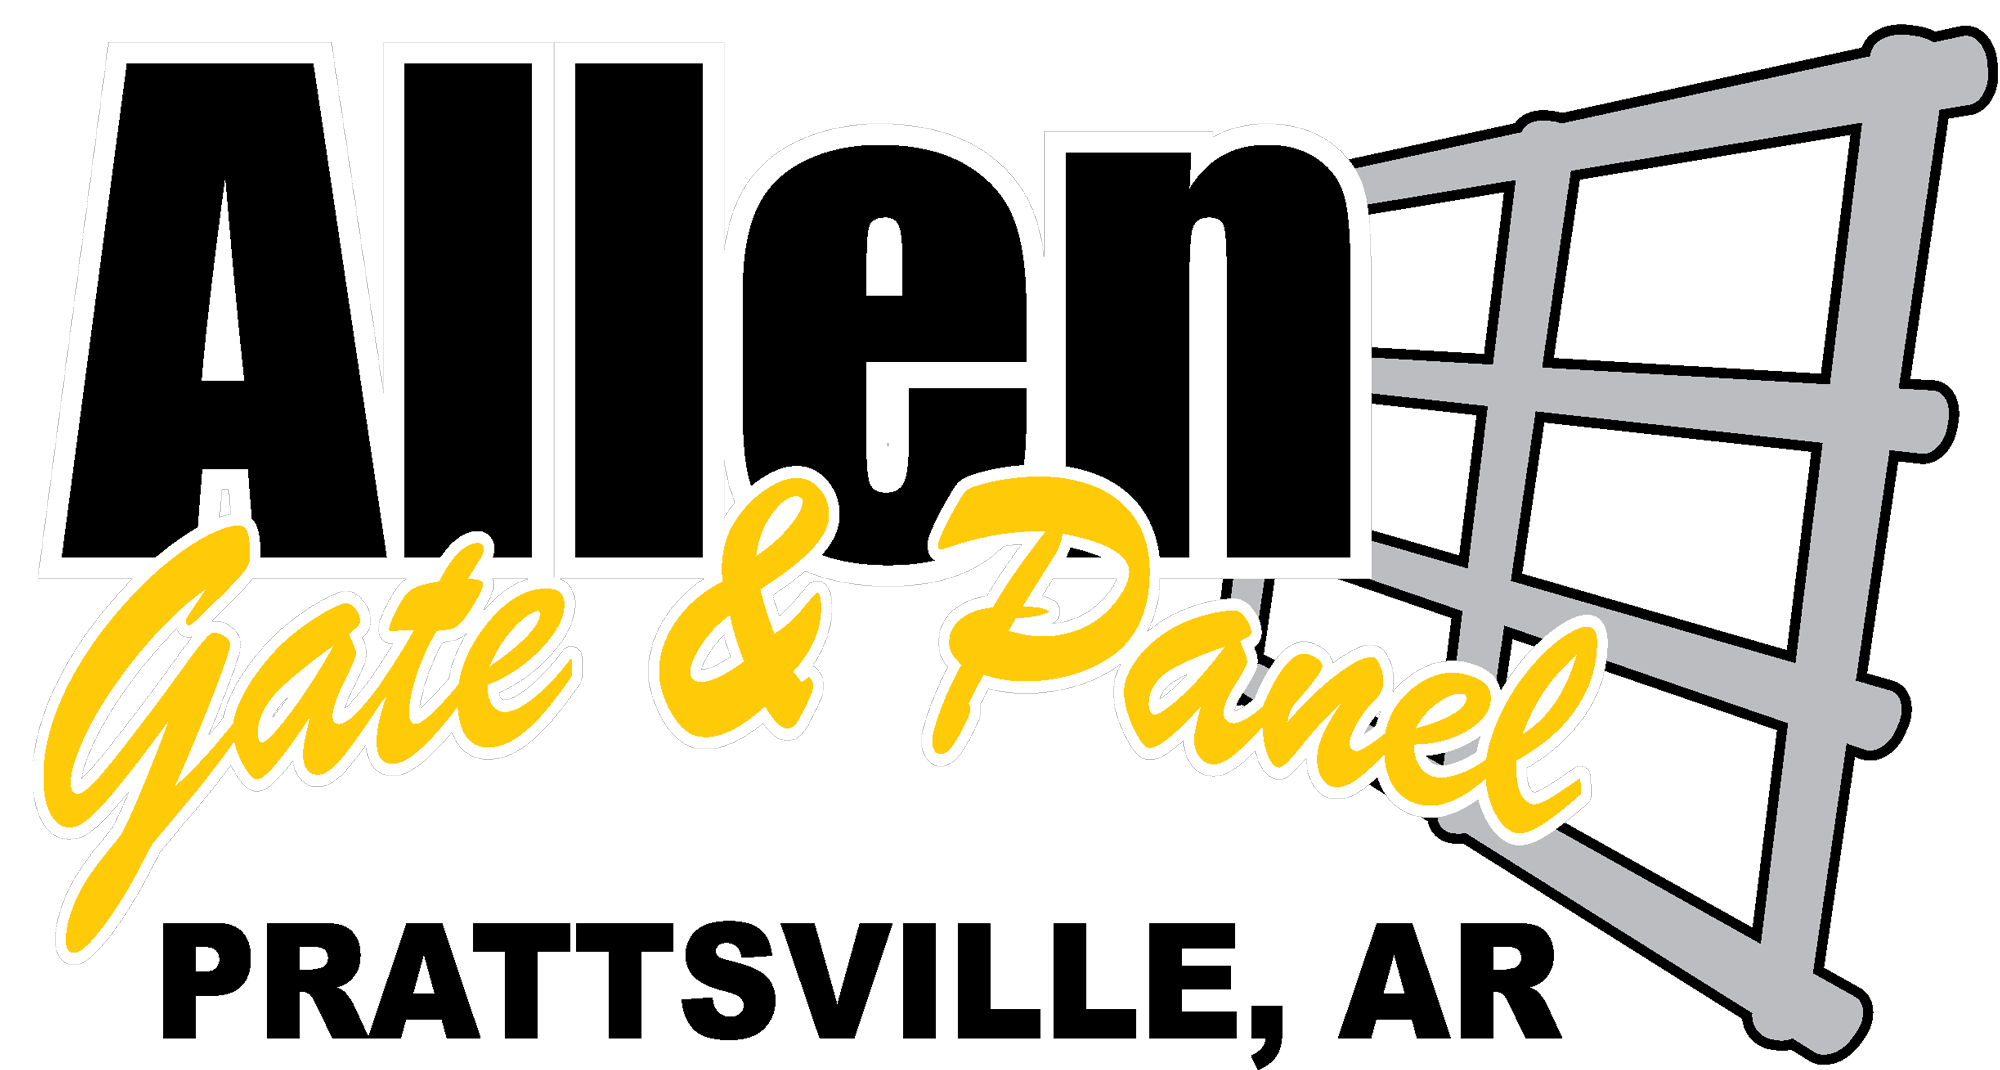 Allen Gate & Panel logo